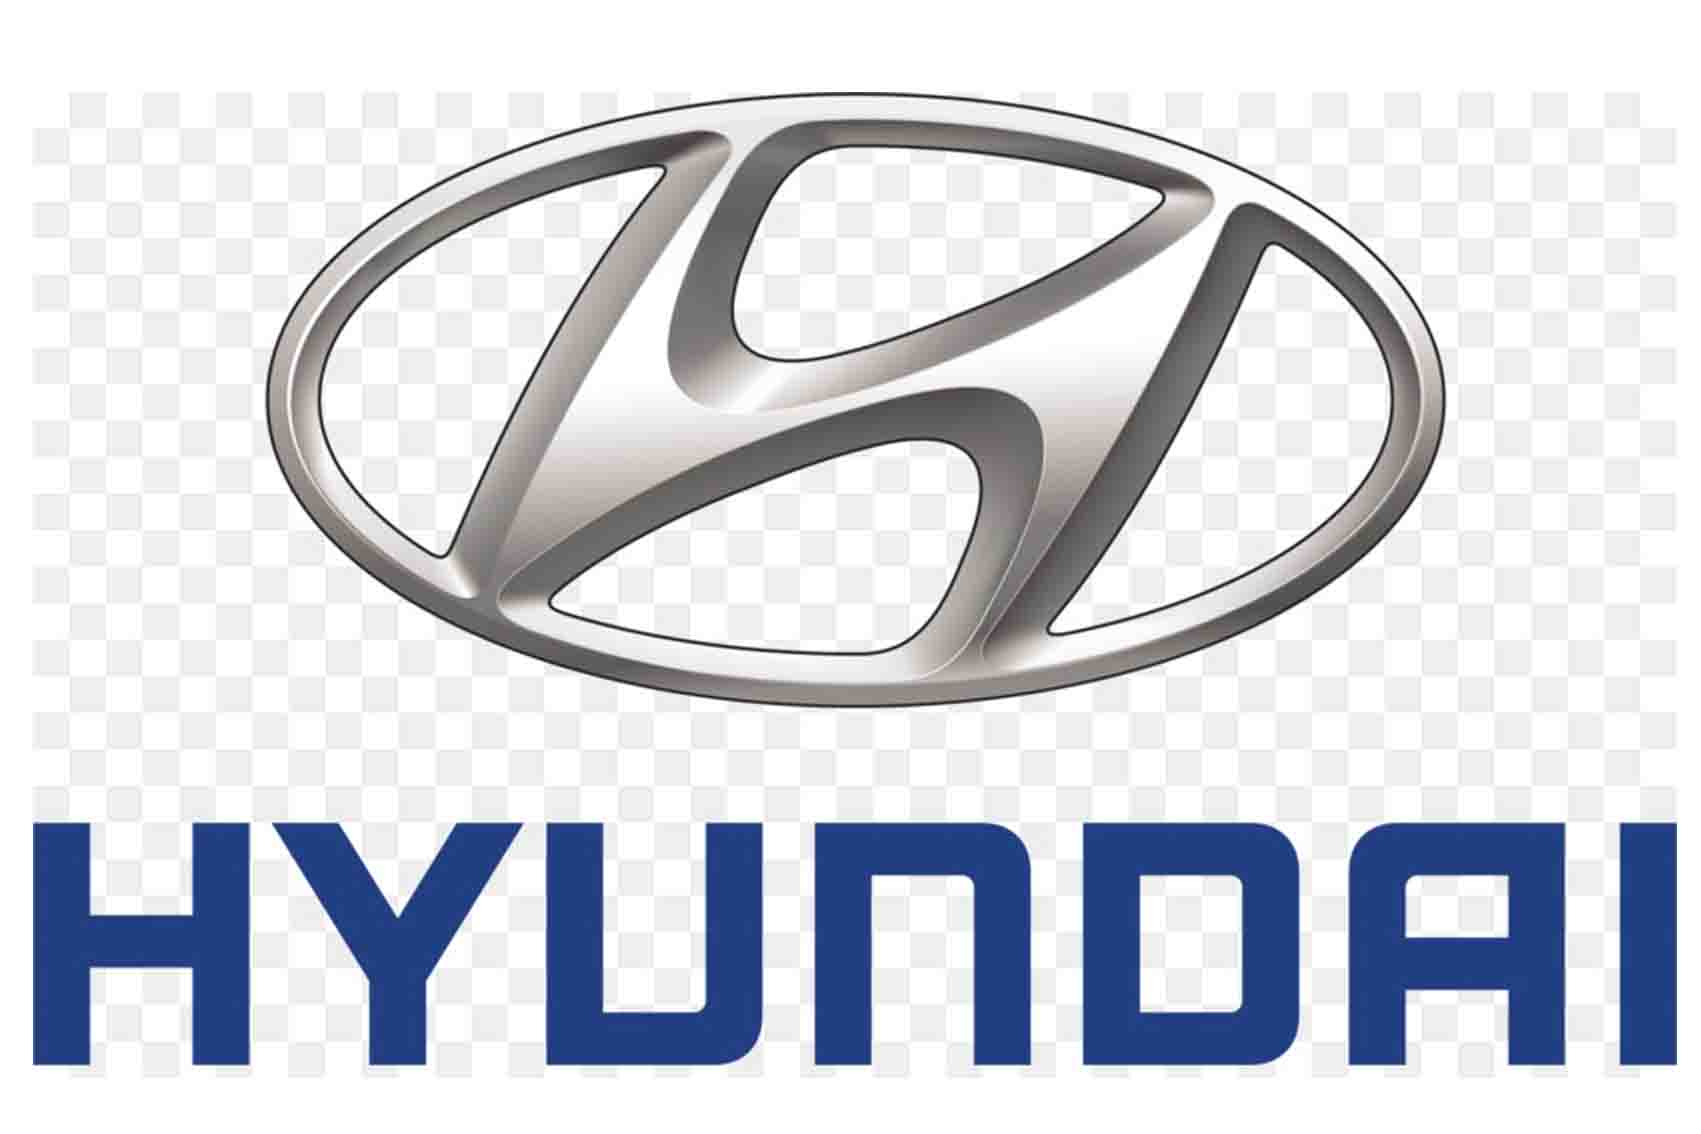 Dàn lạnh Hyundai / Giàn lạnh Hyundai